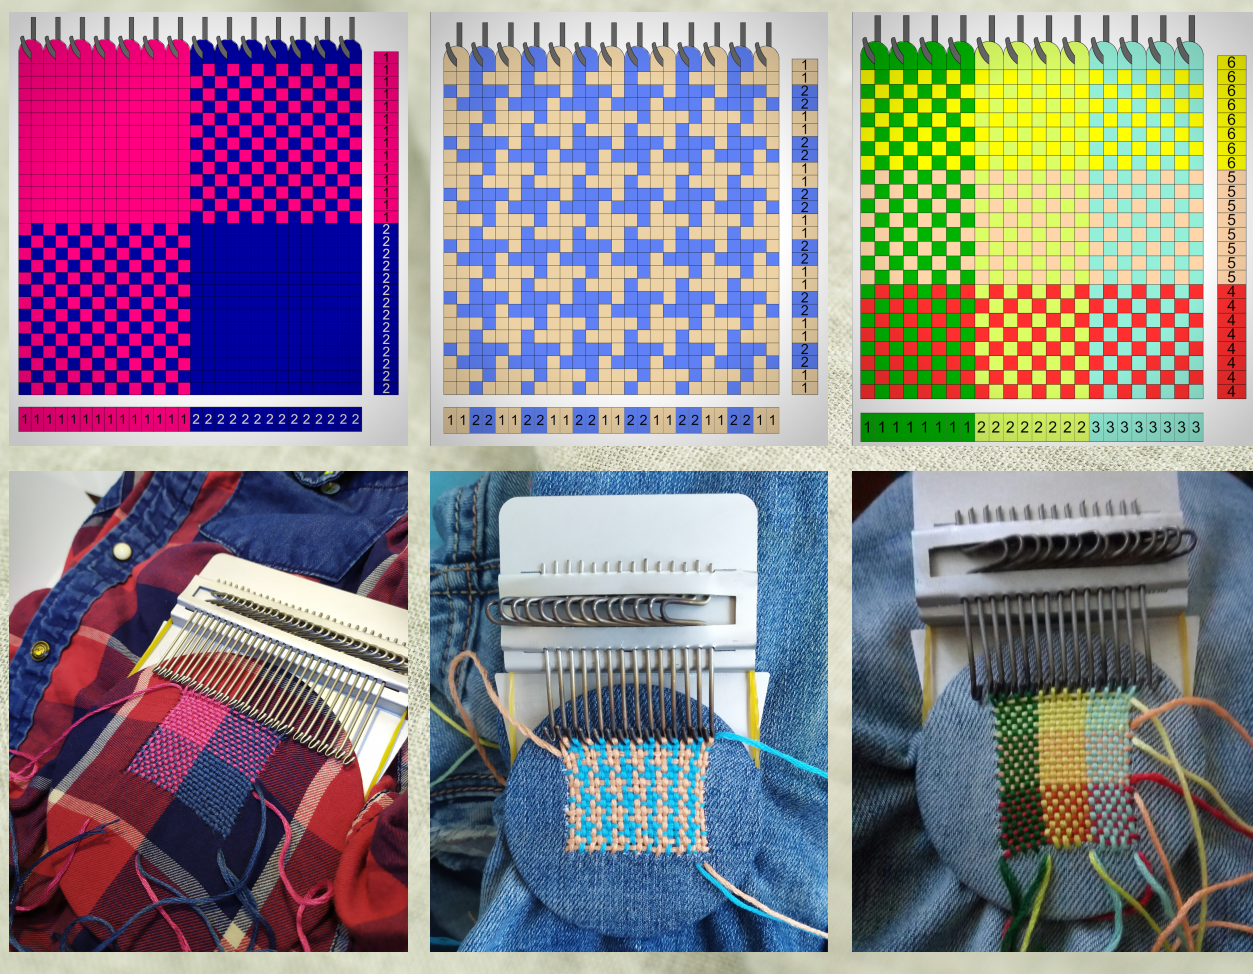 Pattern Design for Speedweve, Darning Patterns, Mending Loom 